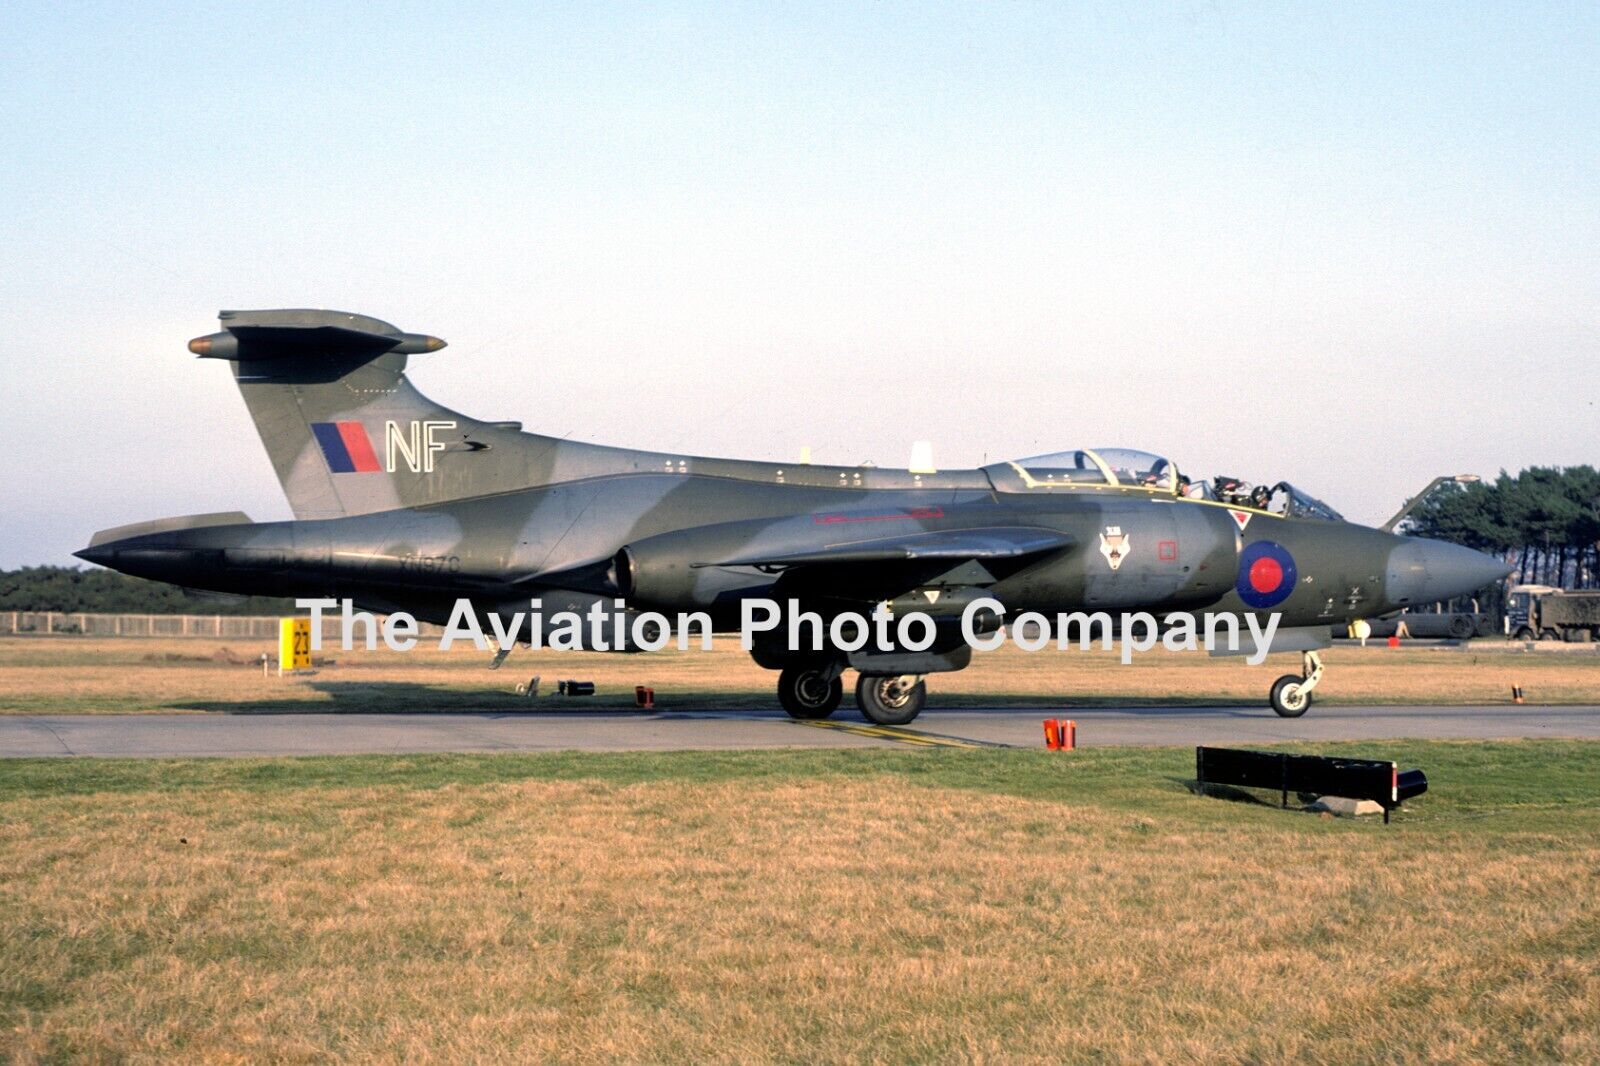 RAF 12 Squadron Blackburn Buccaneer S.2 XN978/NF (1985) Photograph